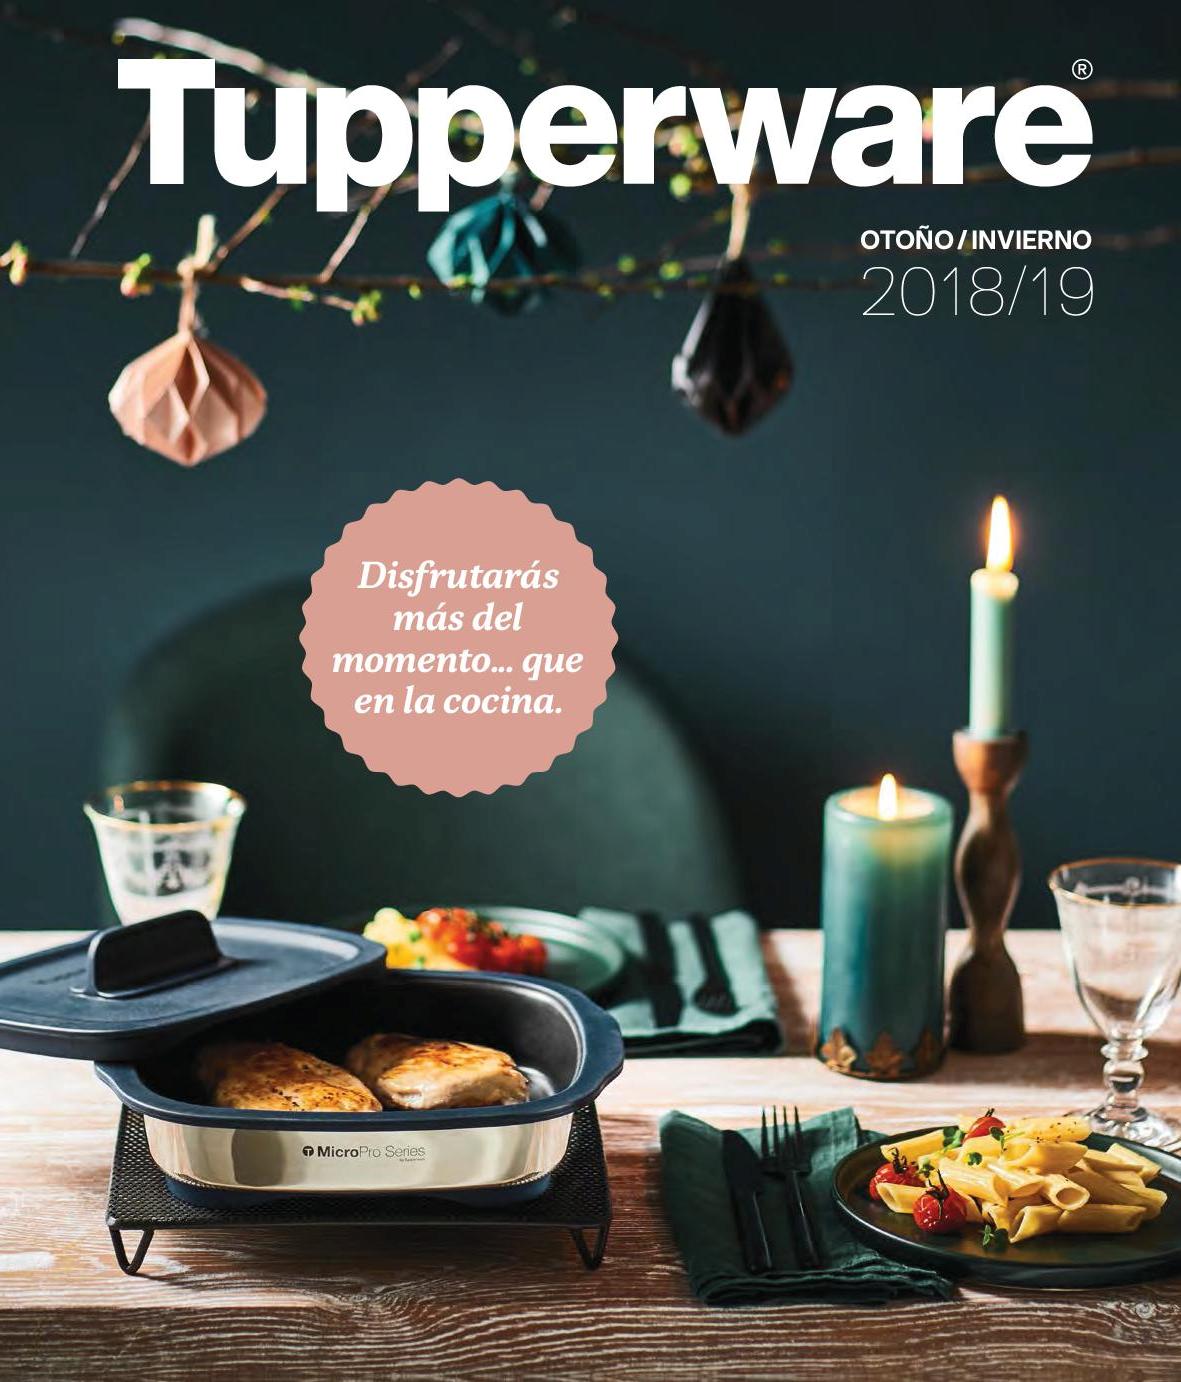 Tupperware: Catálogo otoño-invierno 2018-19